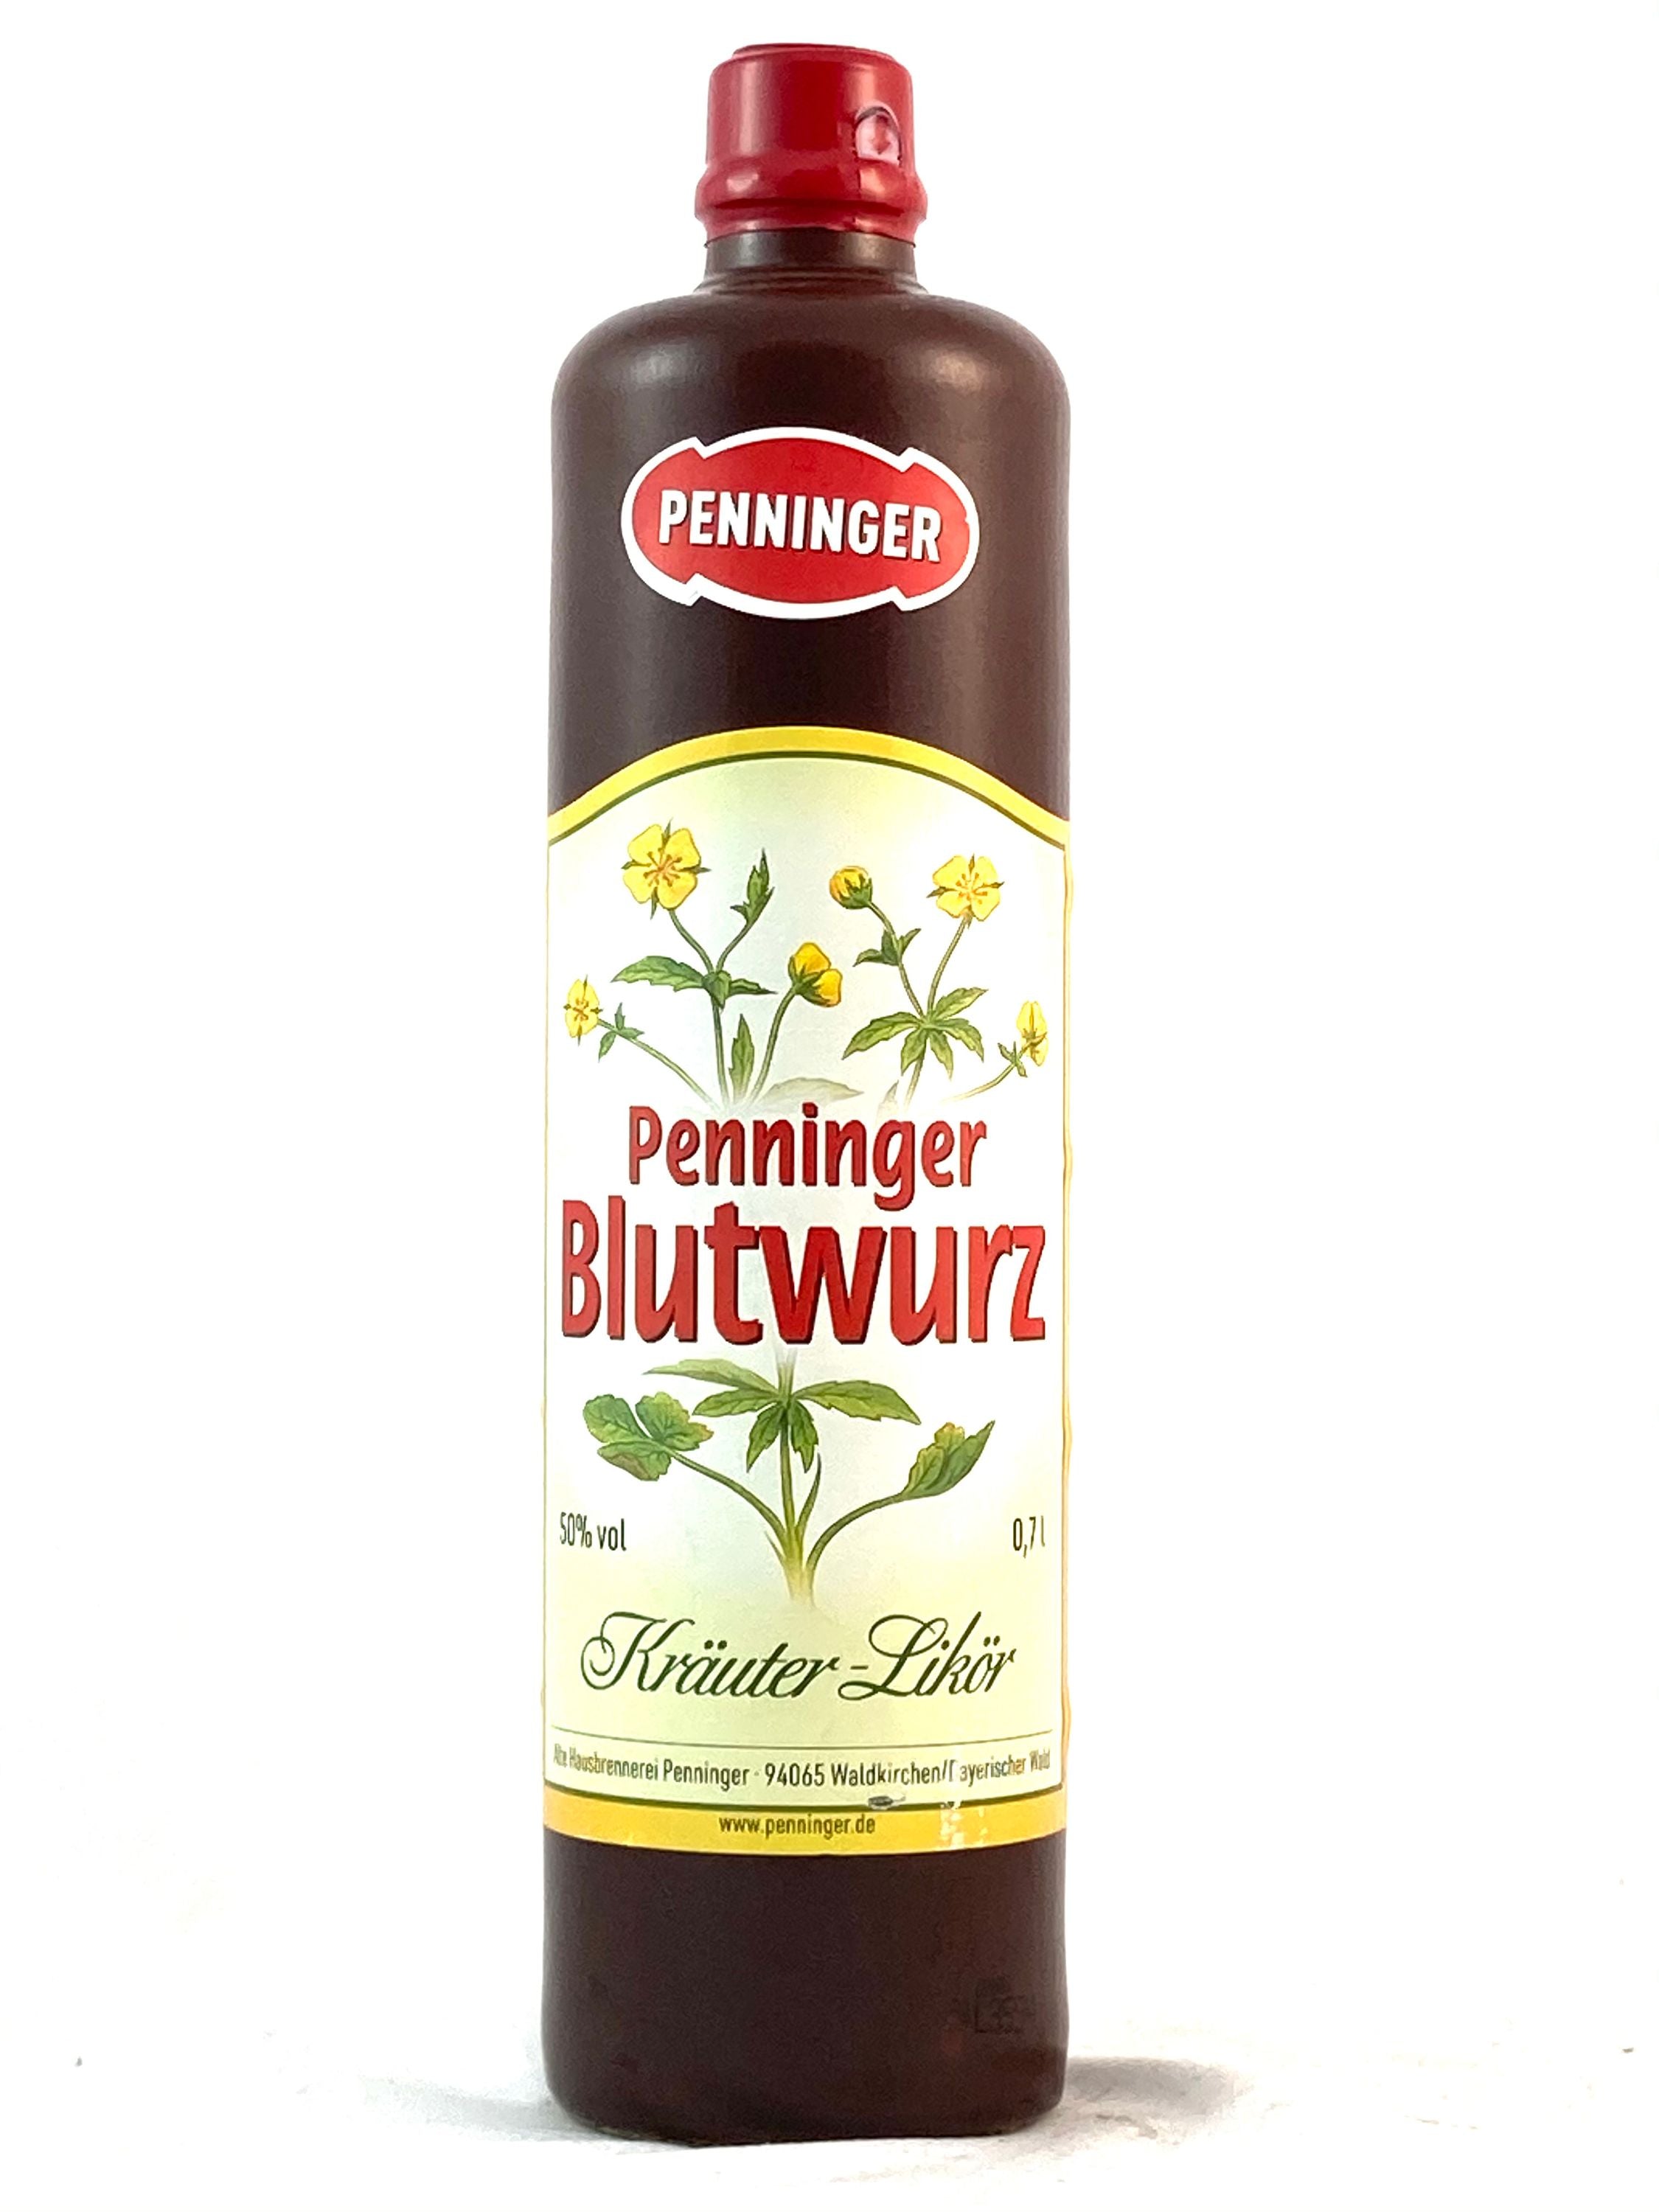 Penninger tormentil 0.7l, alc. 50% by volume, herbal liqueur